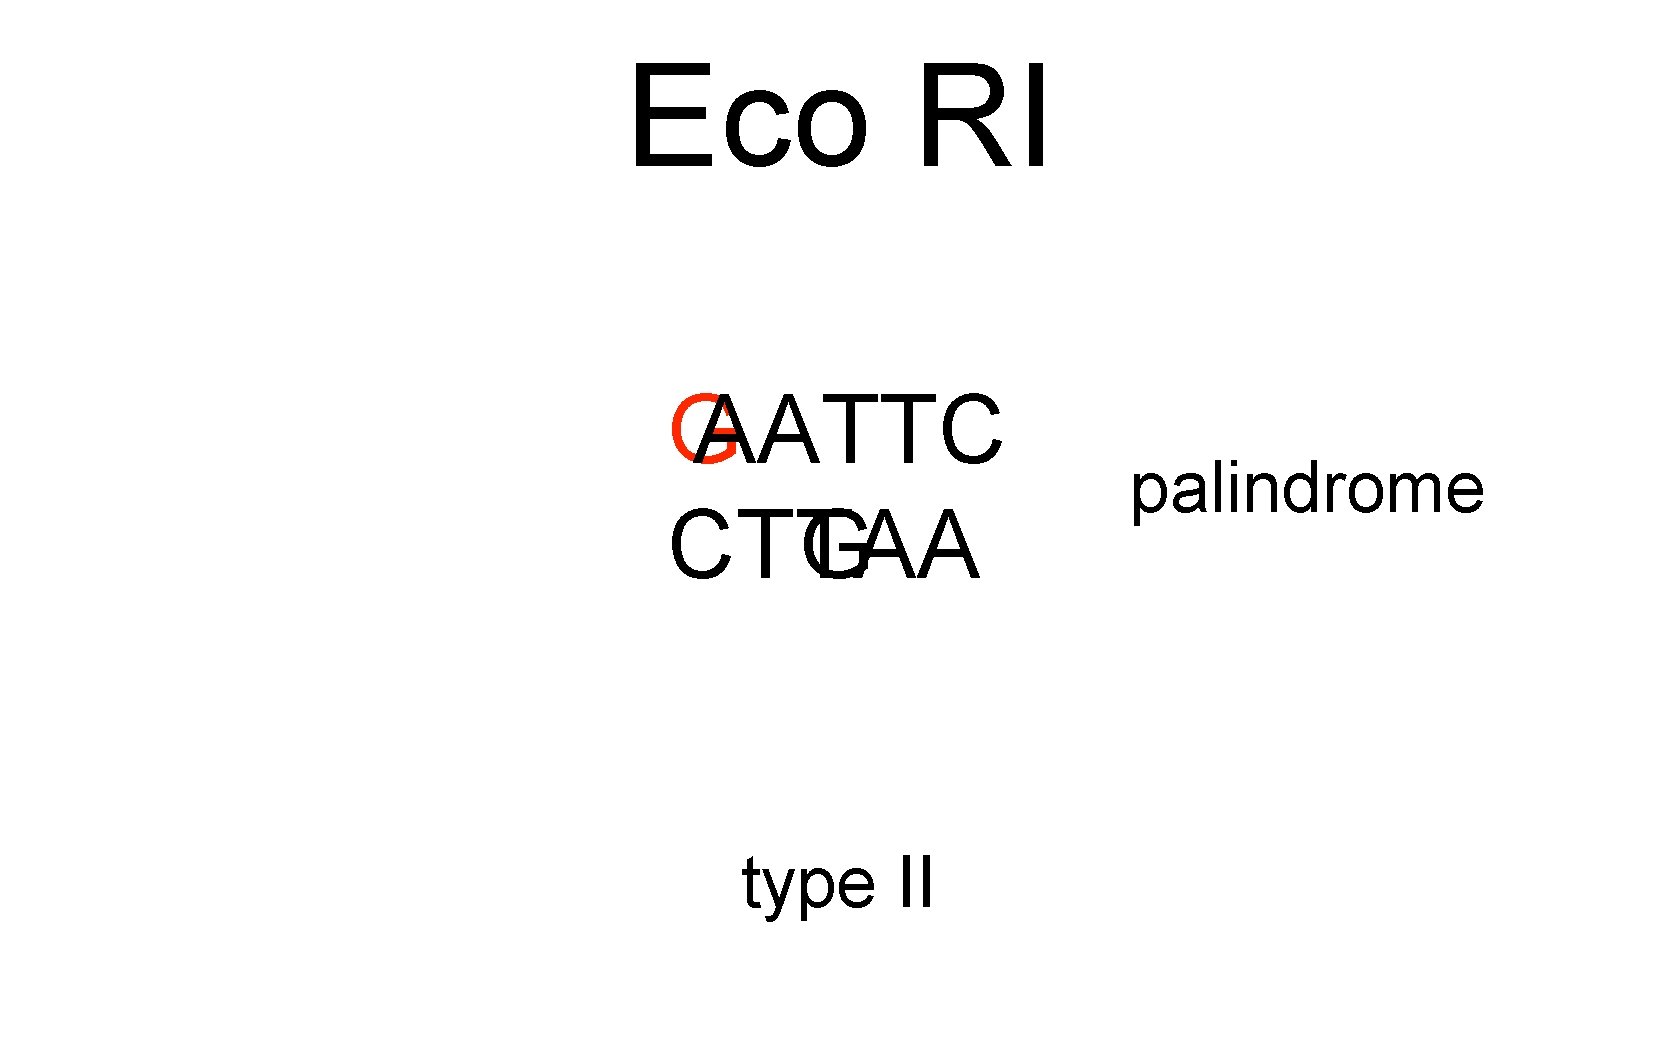 Eco RI G AATTC CTTAA G type II palindrome 